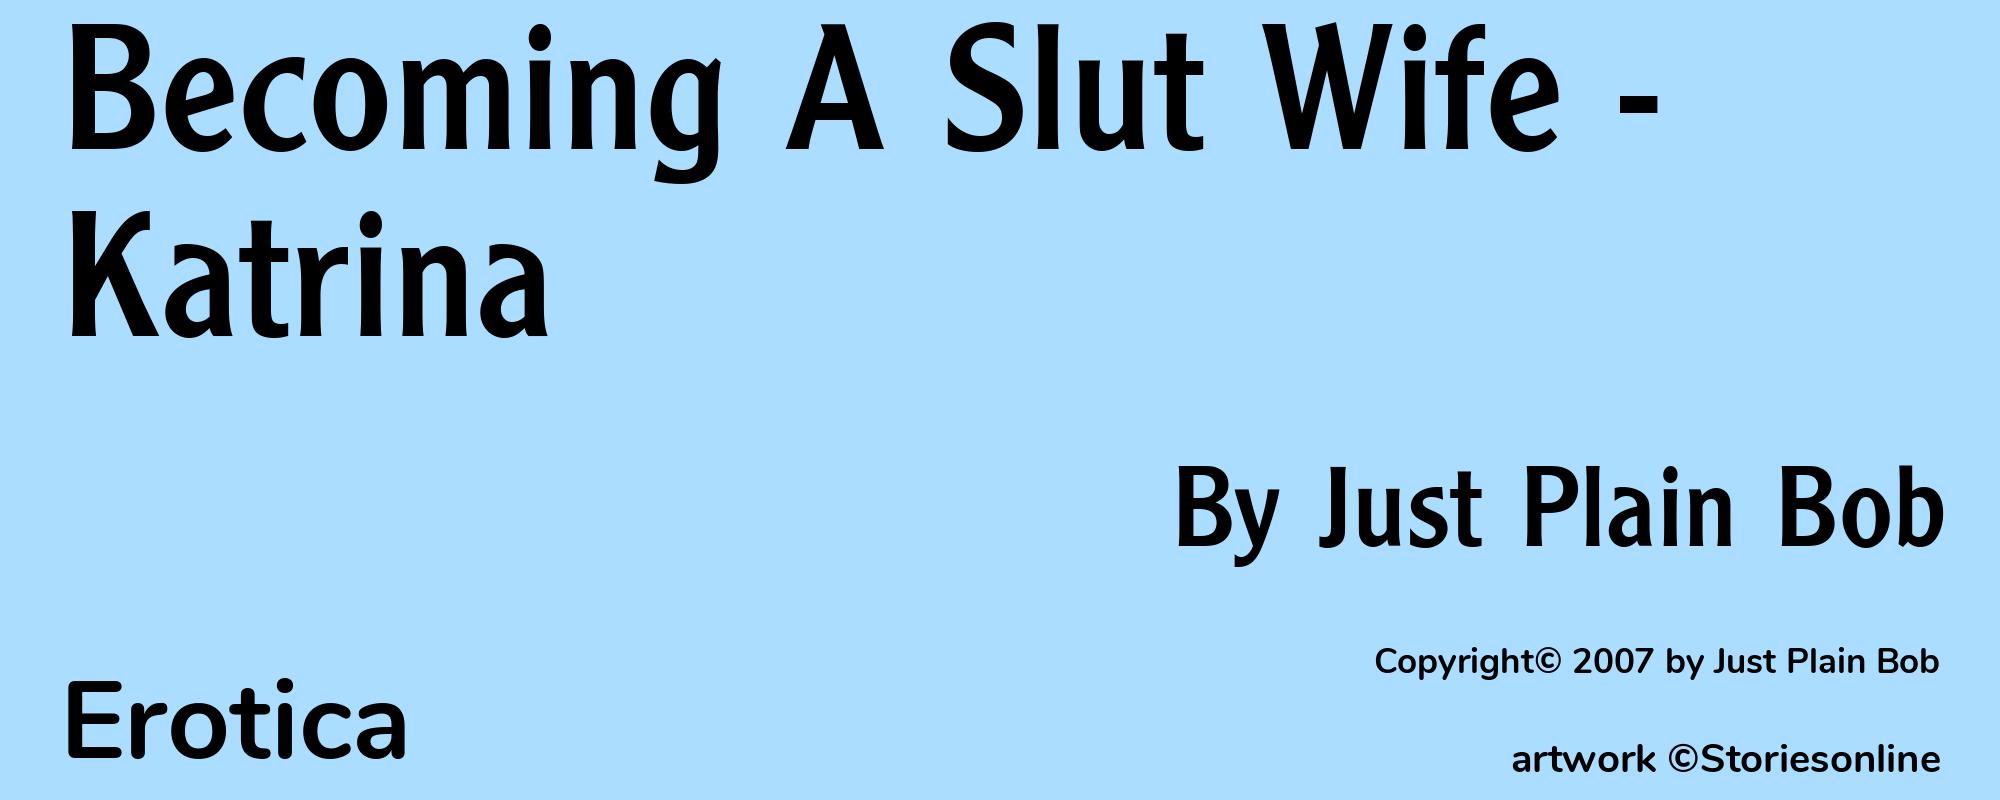 Becoming A Slut Wife - Katrina - Cover